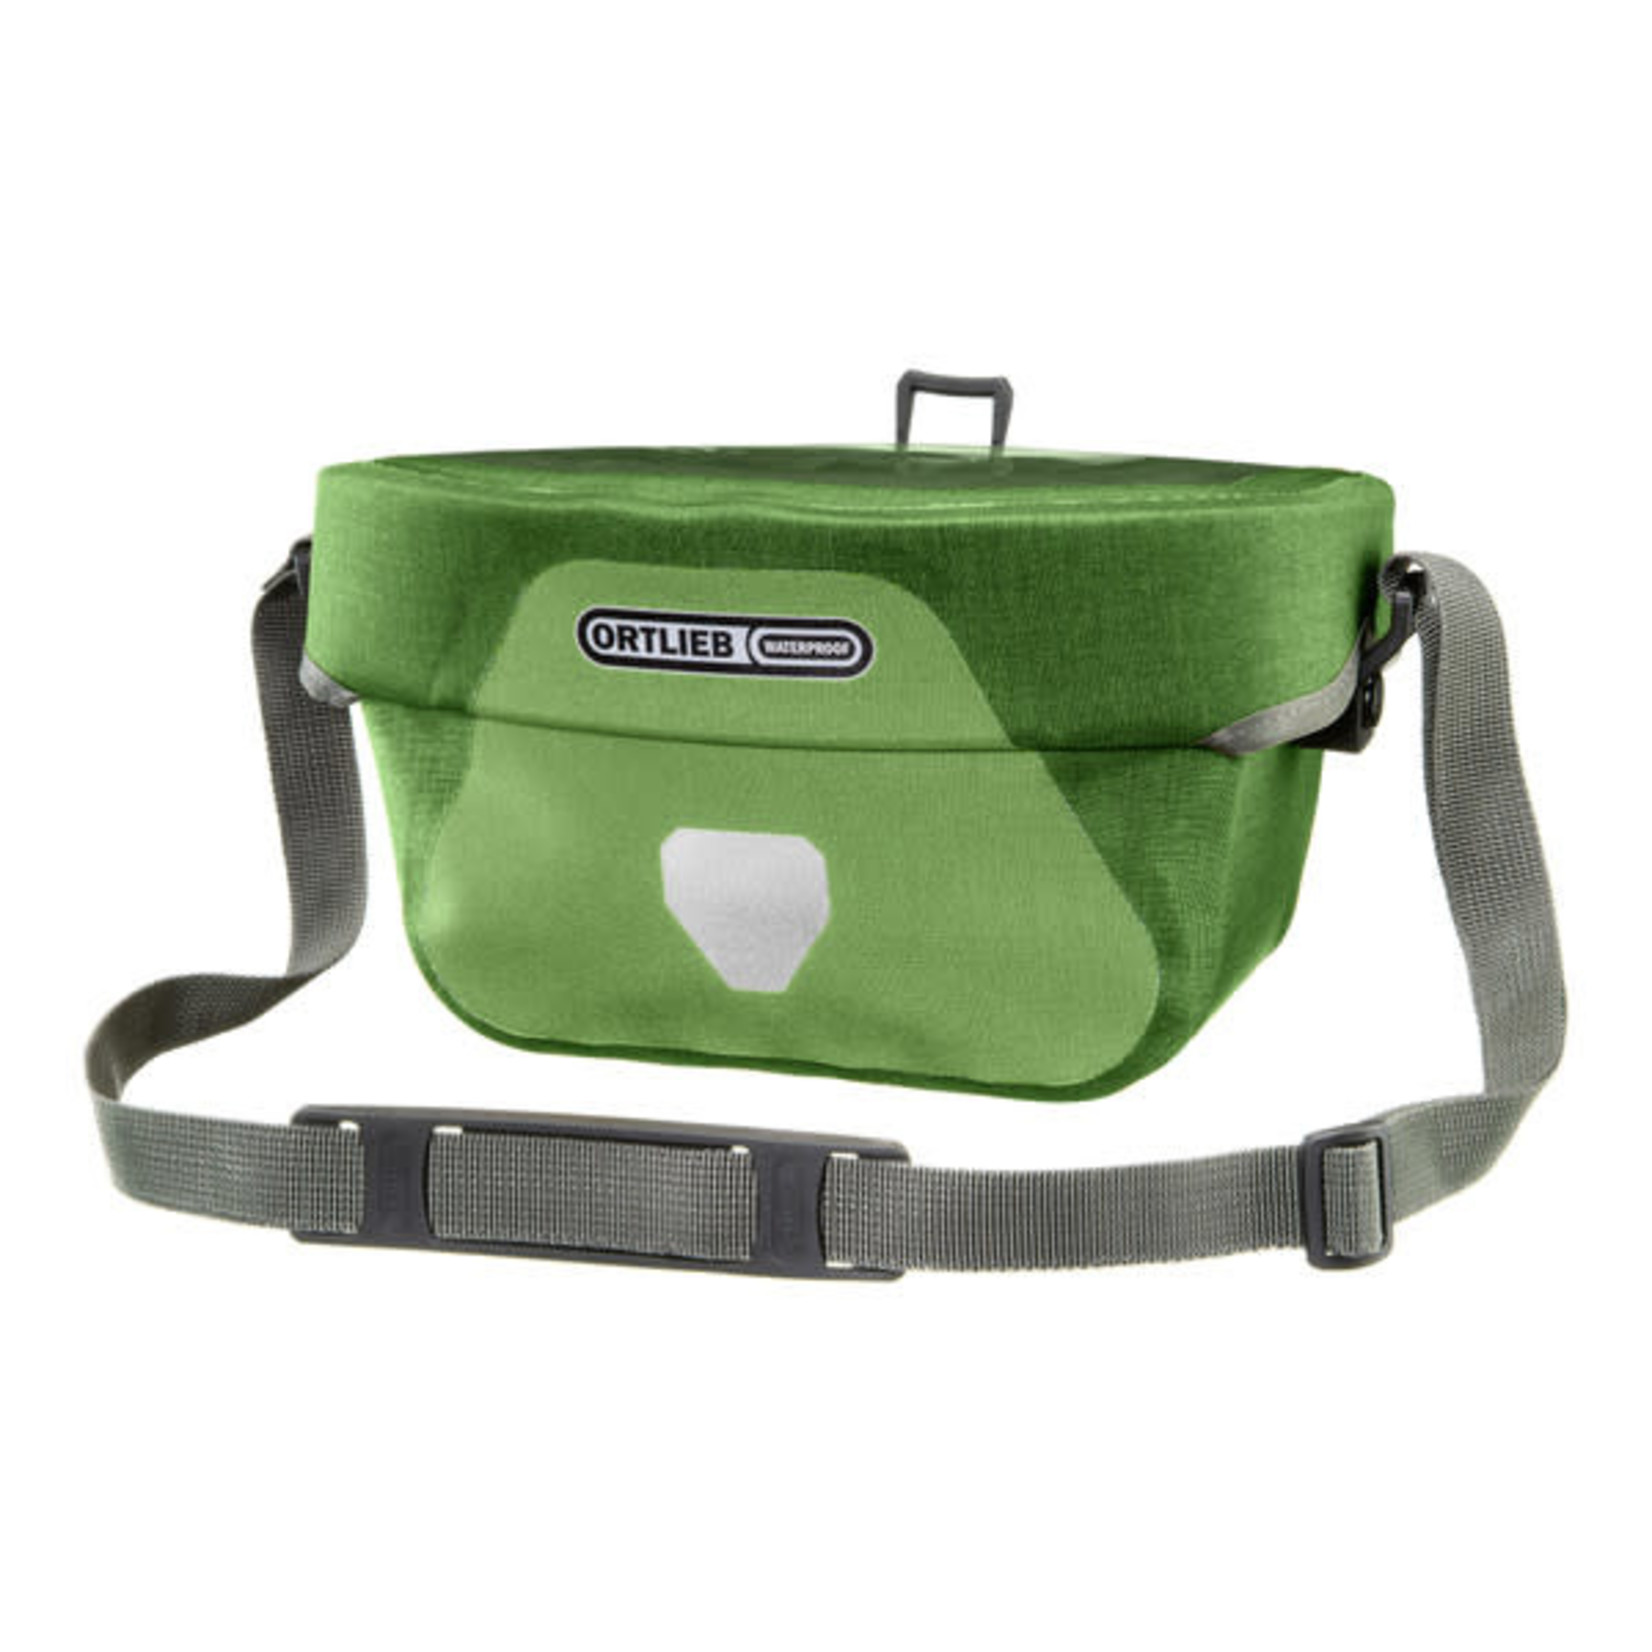 Ortlieb Ortlieb Ultimate Six Plus Handlebar Bag F3637 - 5L Kiwi-Moss Green